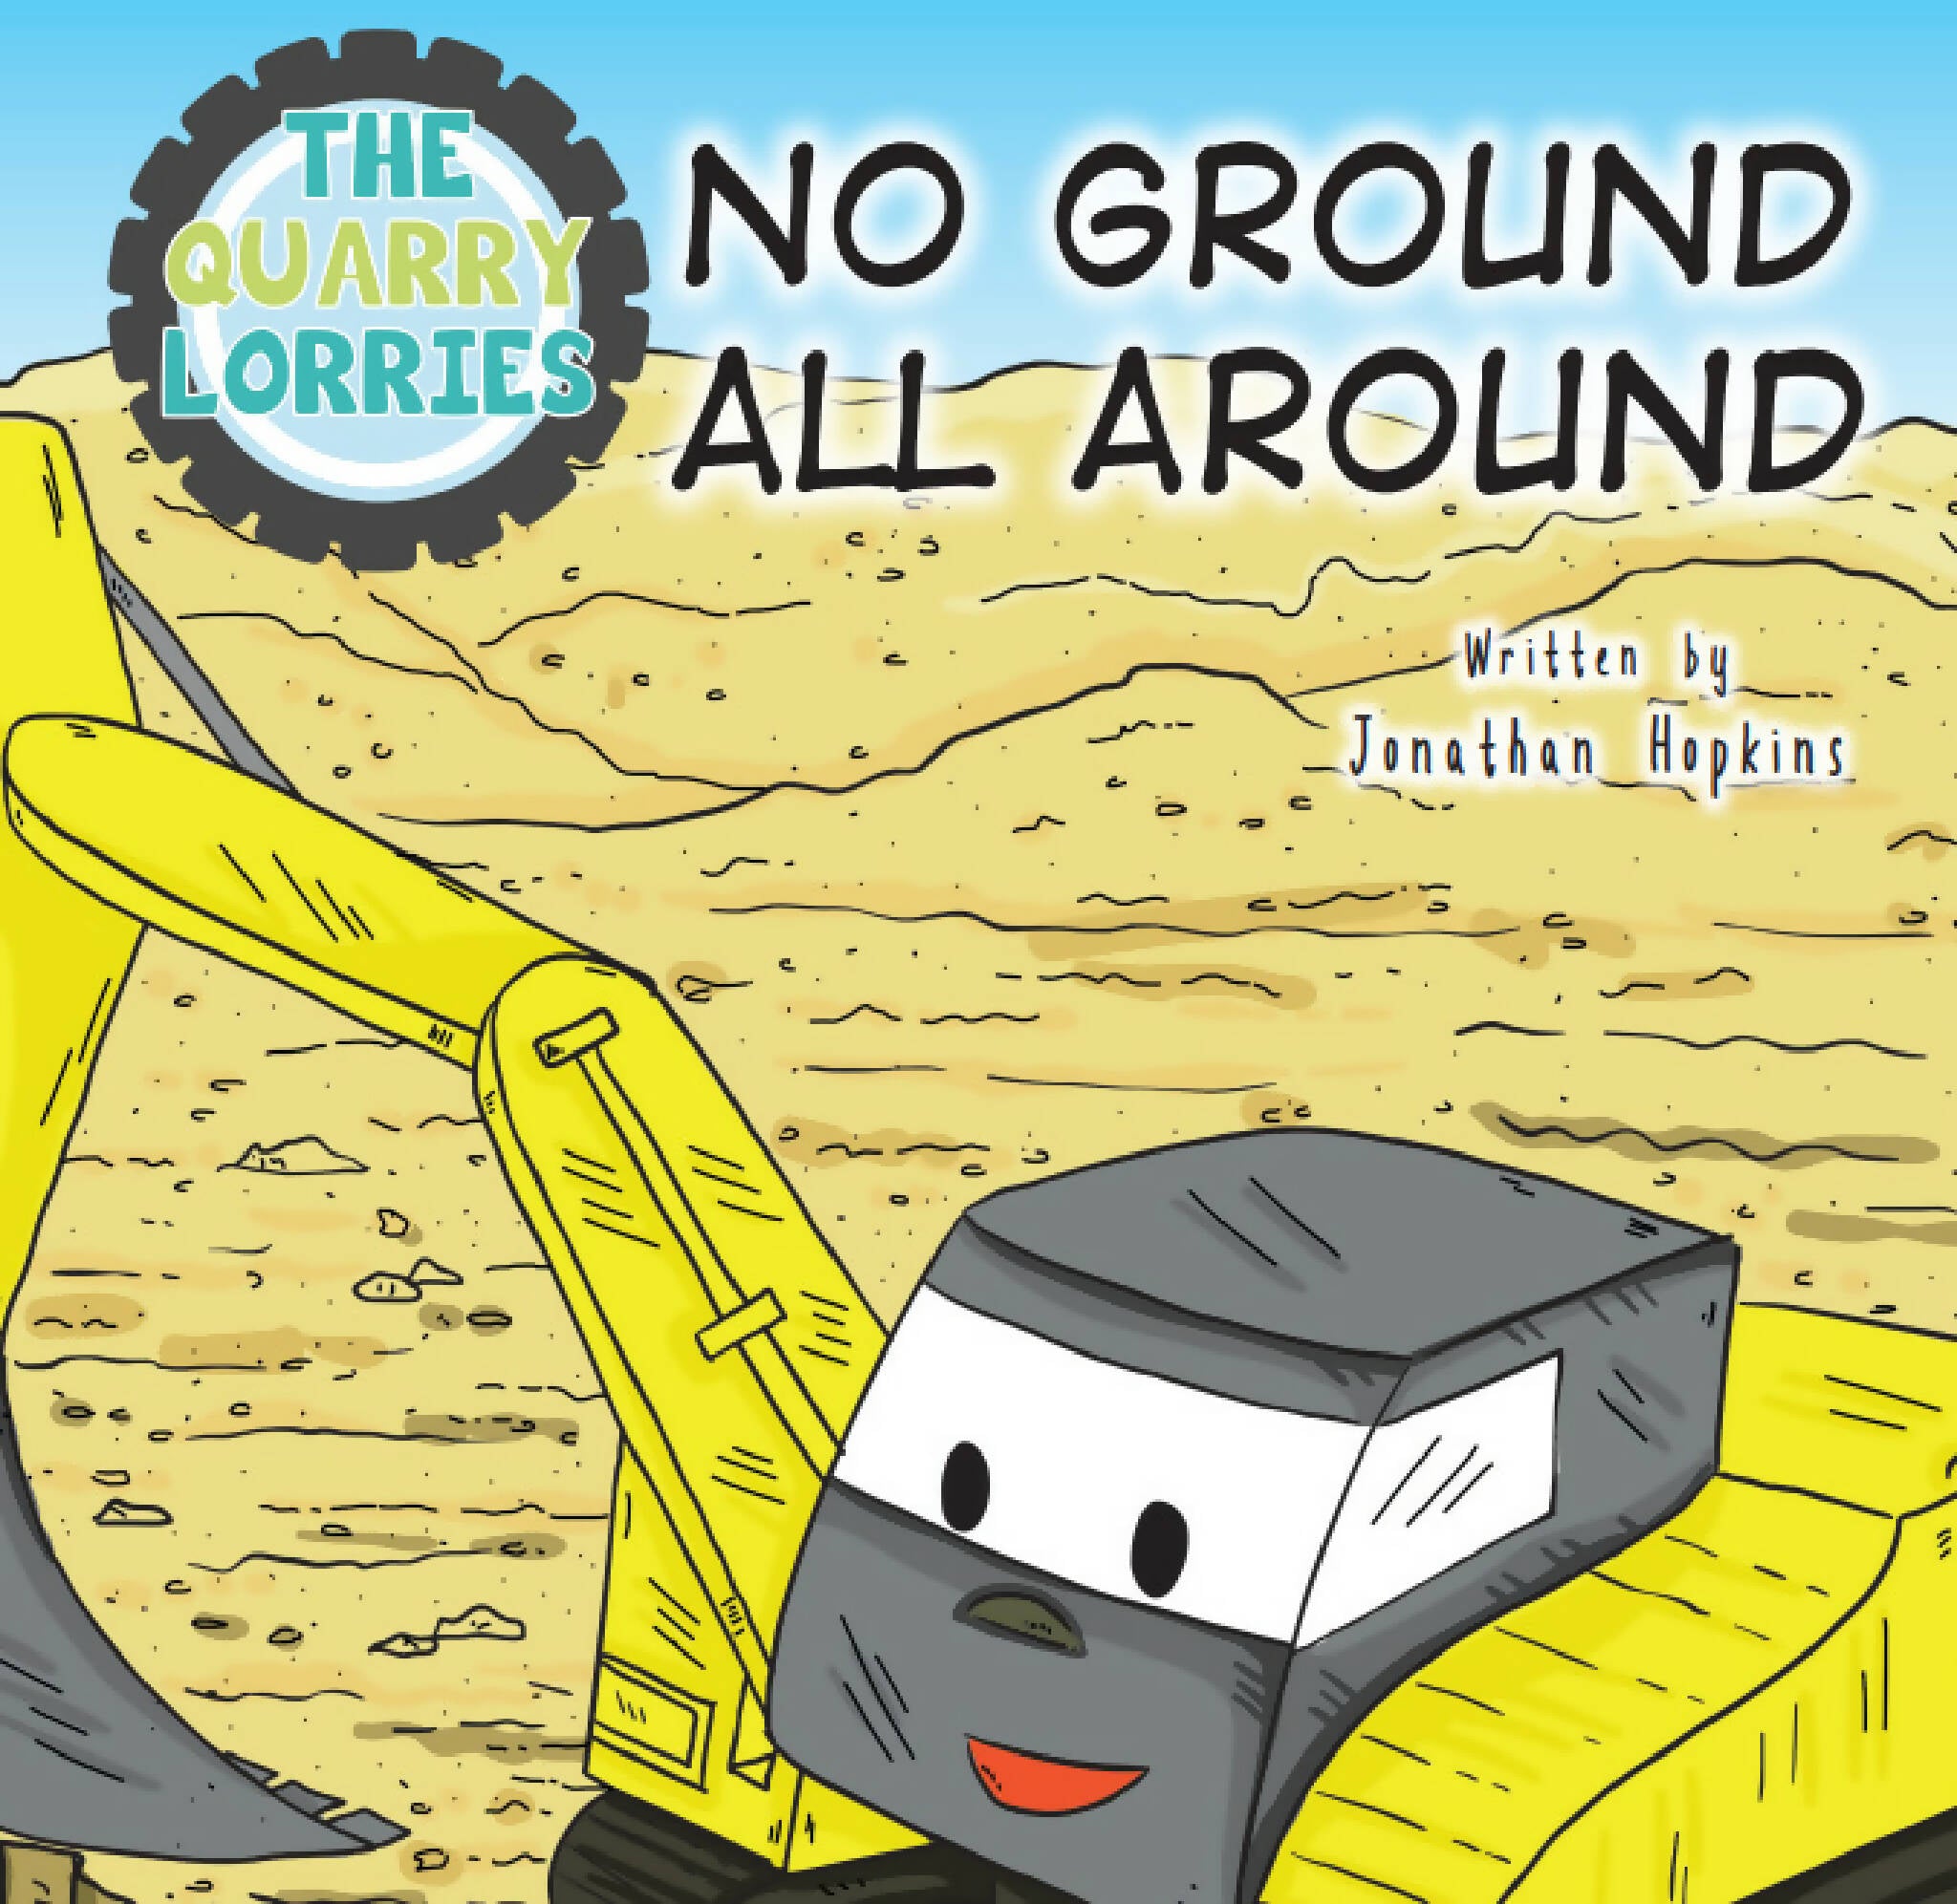 The Quarry Lorries: No Ground All Around